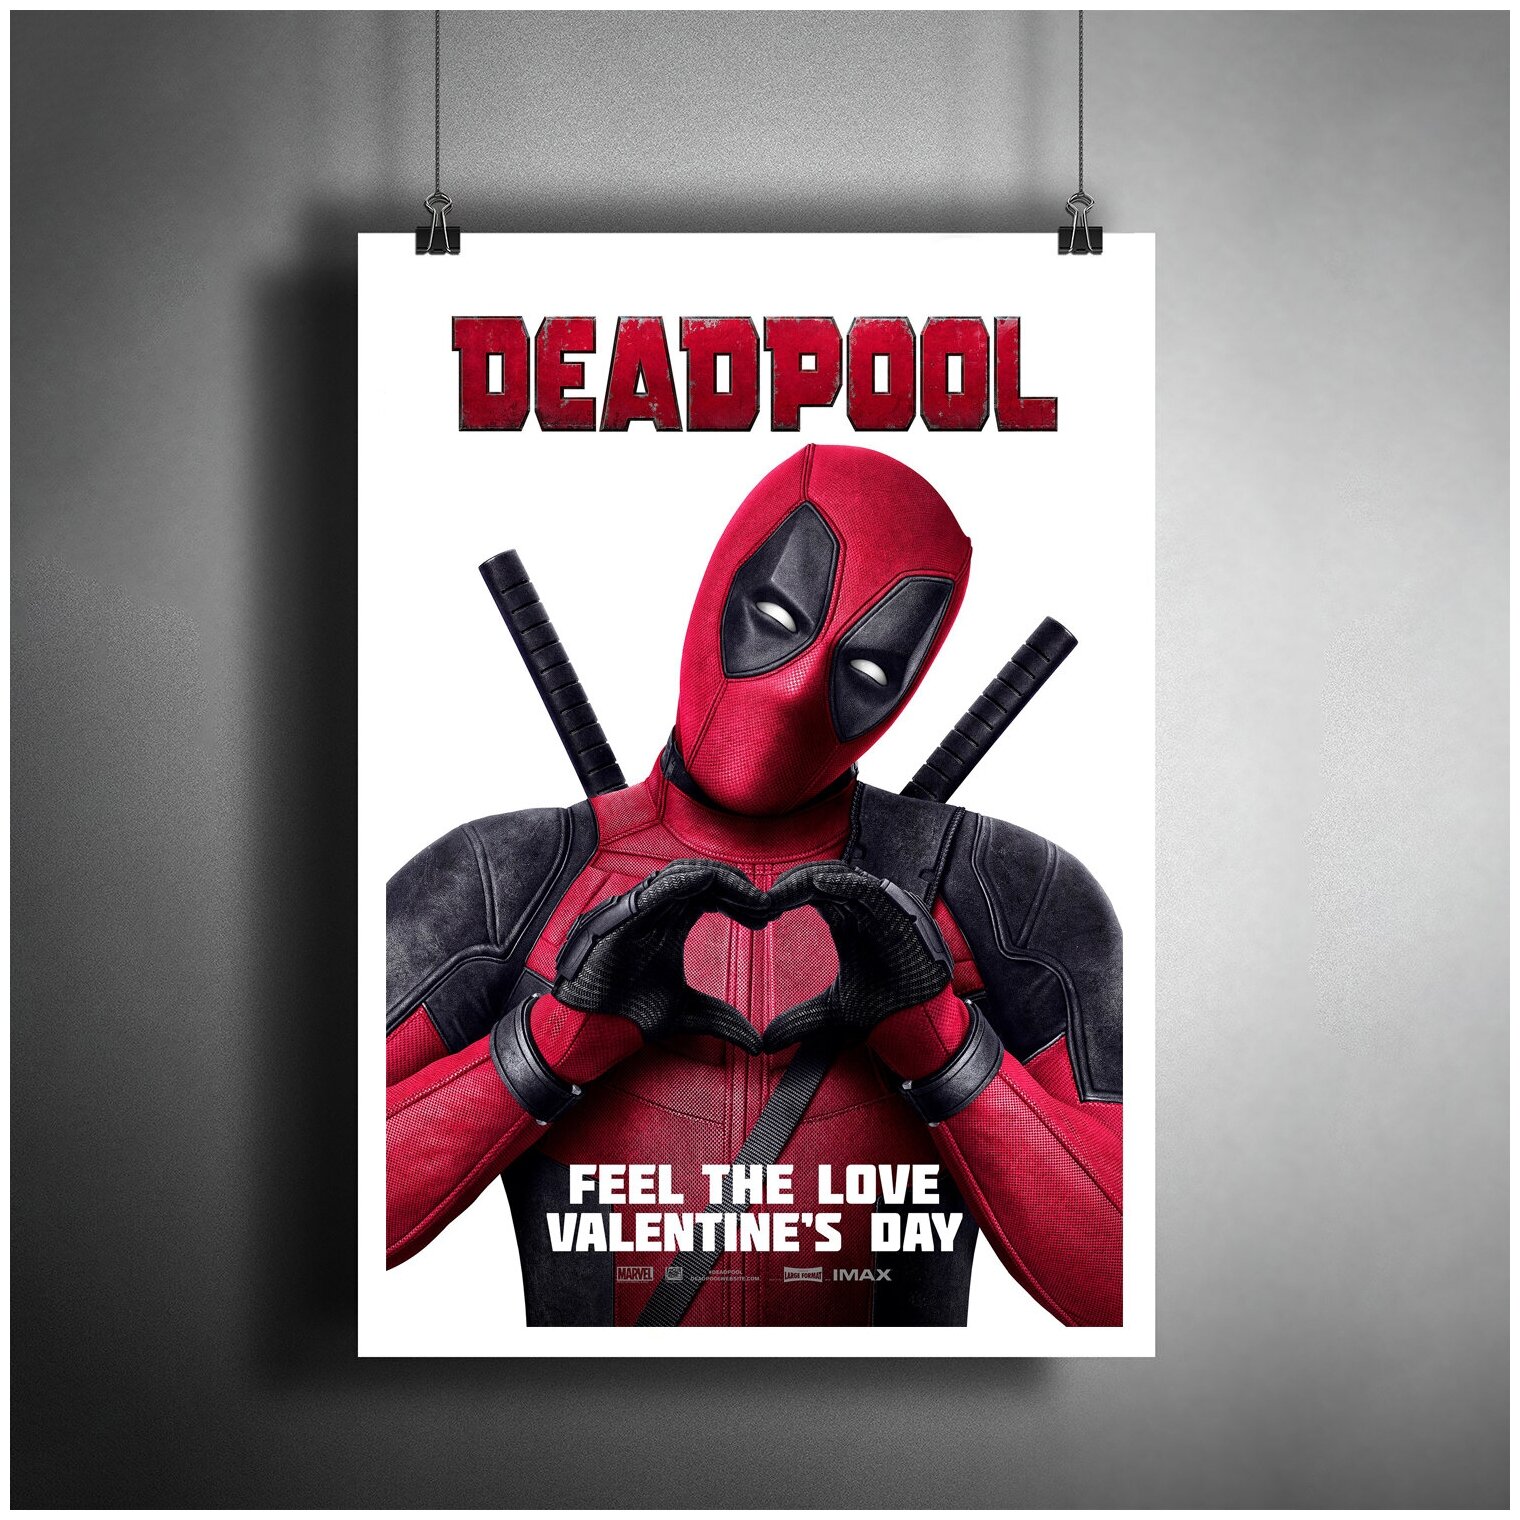 Постер плакат для интерьера "Фильм: Дэдпул. Deadpool. Комиксы Марвел"/ Декор дома, офиса, комнаты A3 (297 x 420 мм)